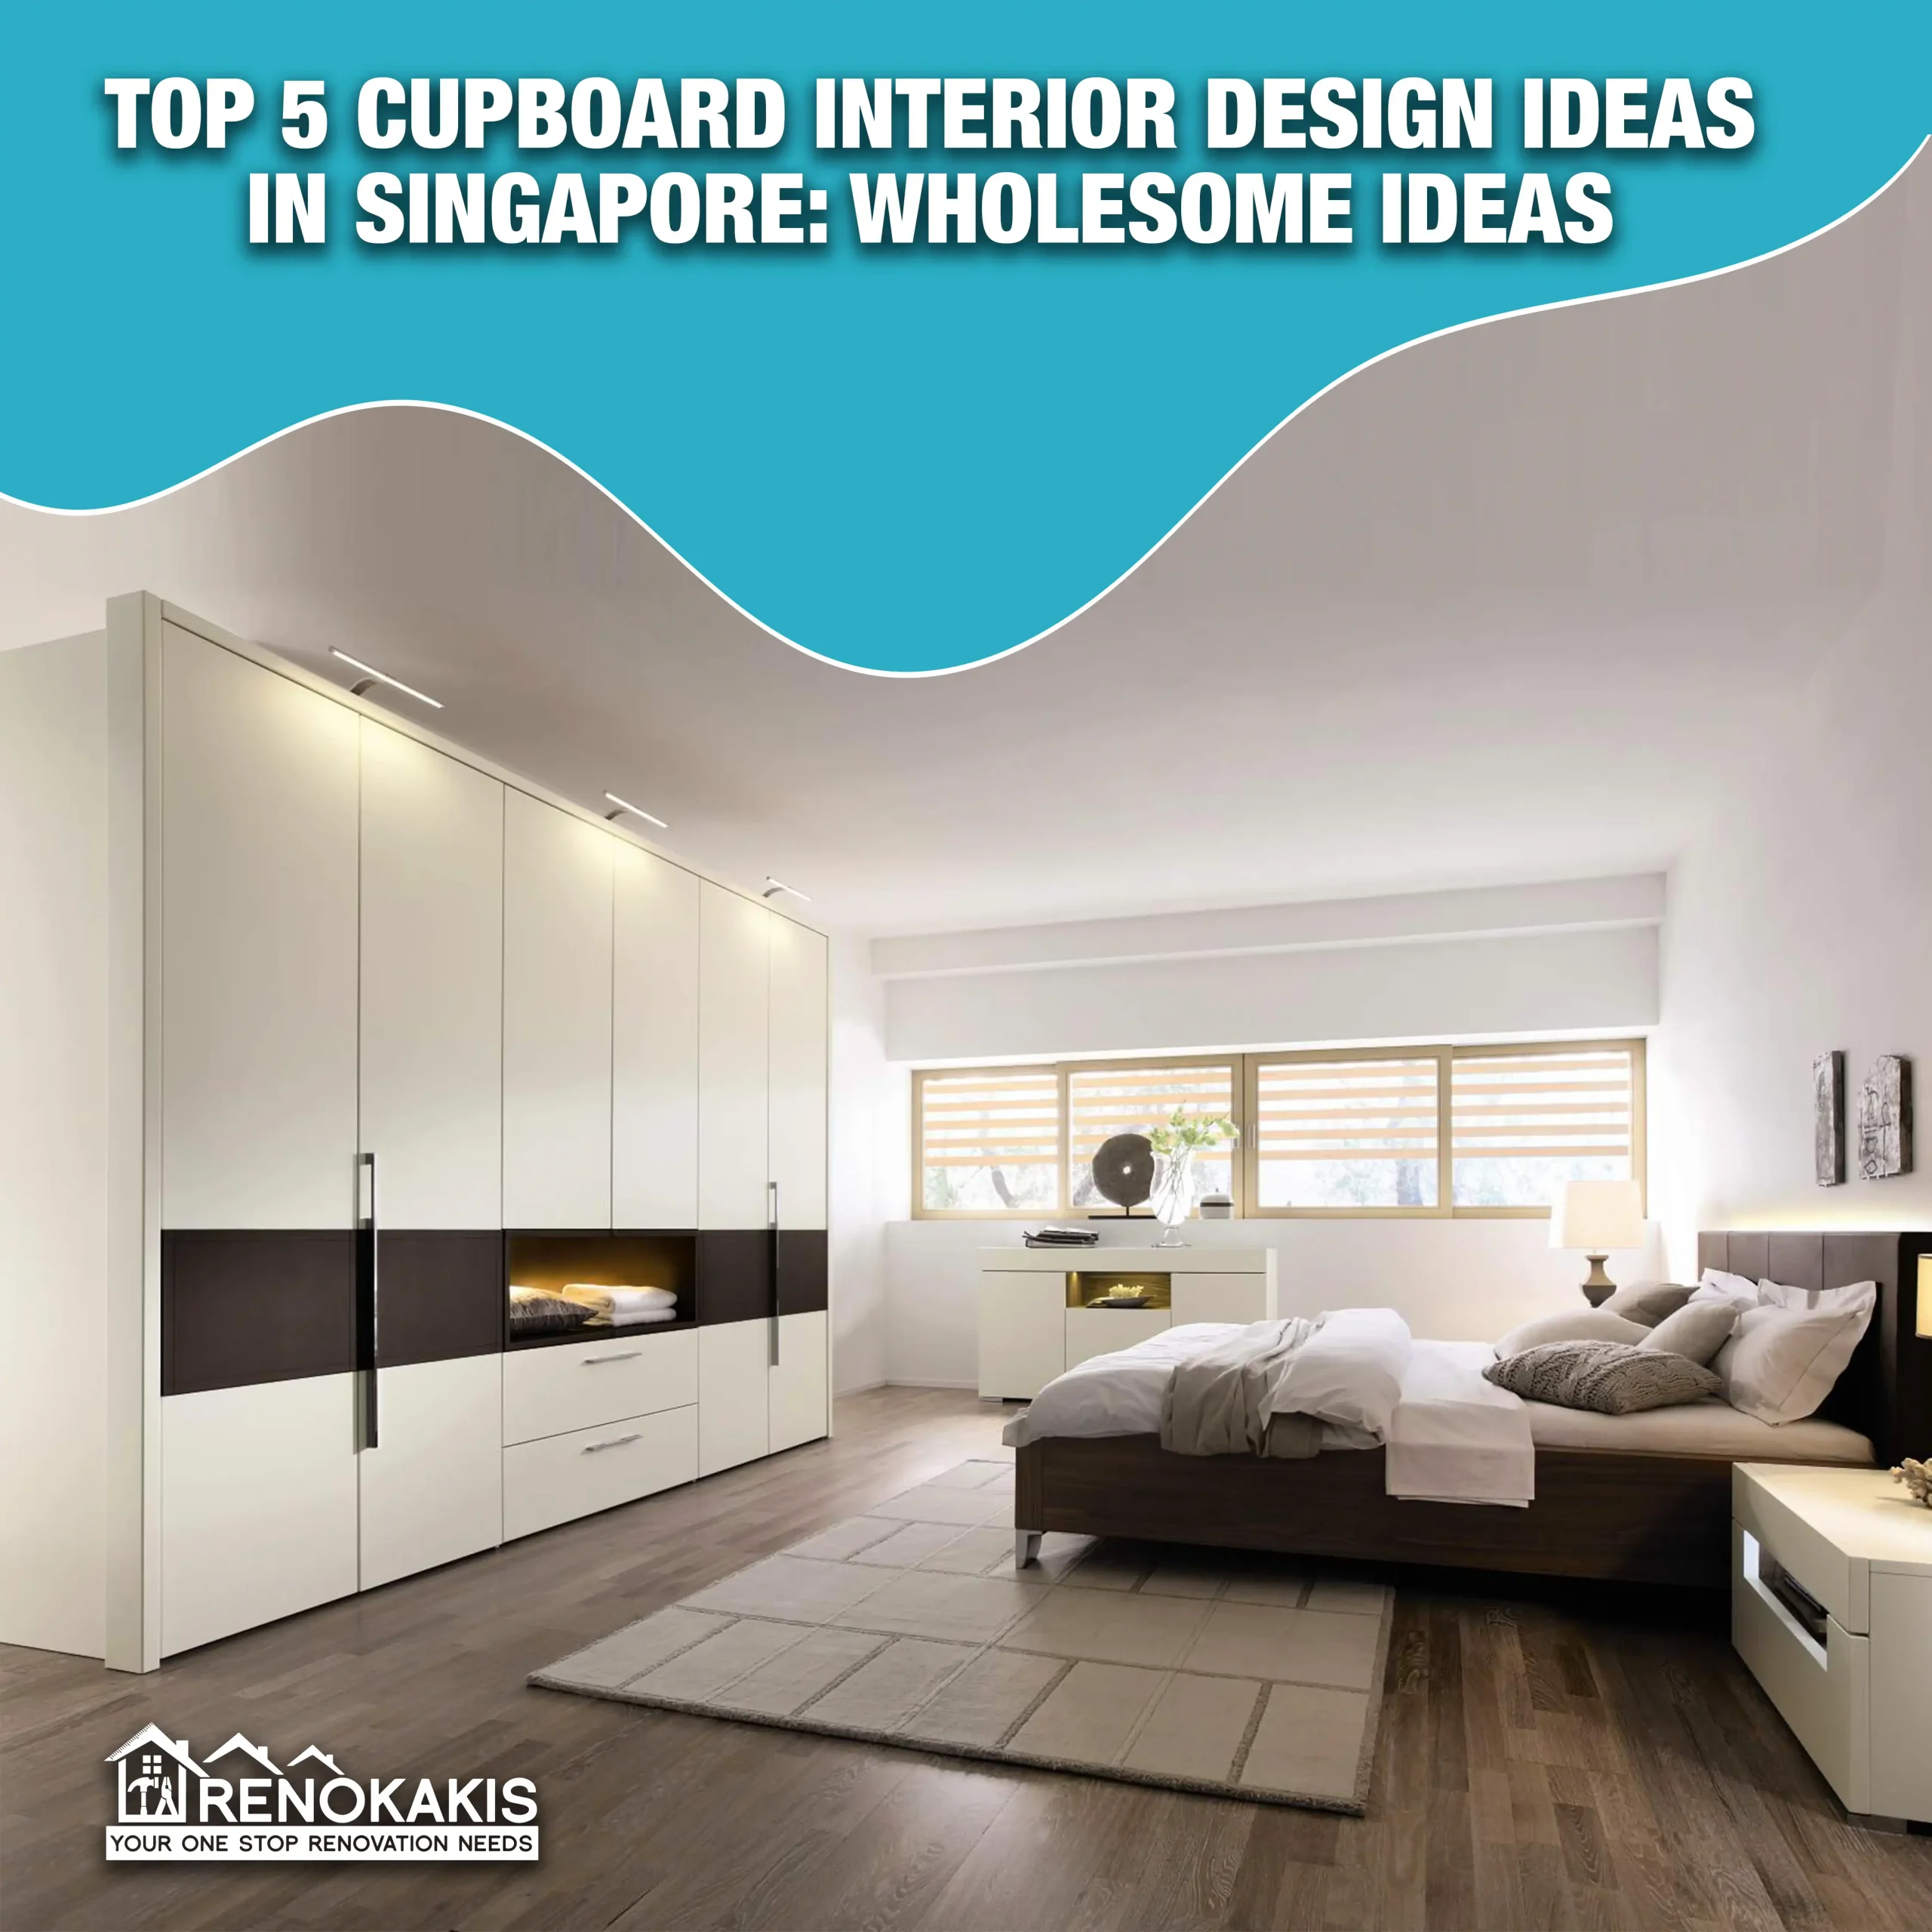 Top 5 Cupboard Interior Design Ideas in Singapore: Wholesome Ideas